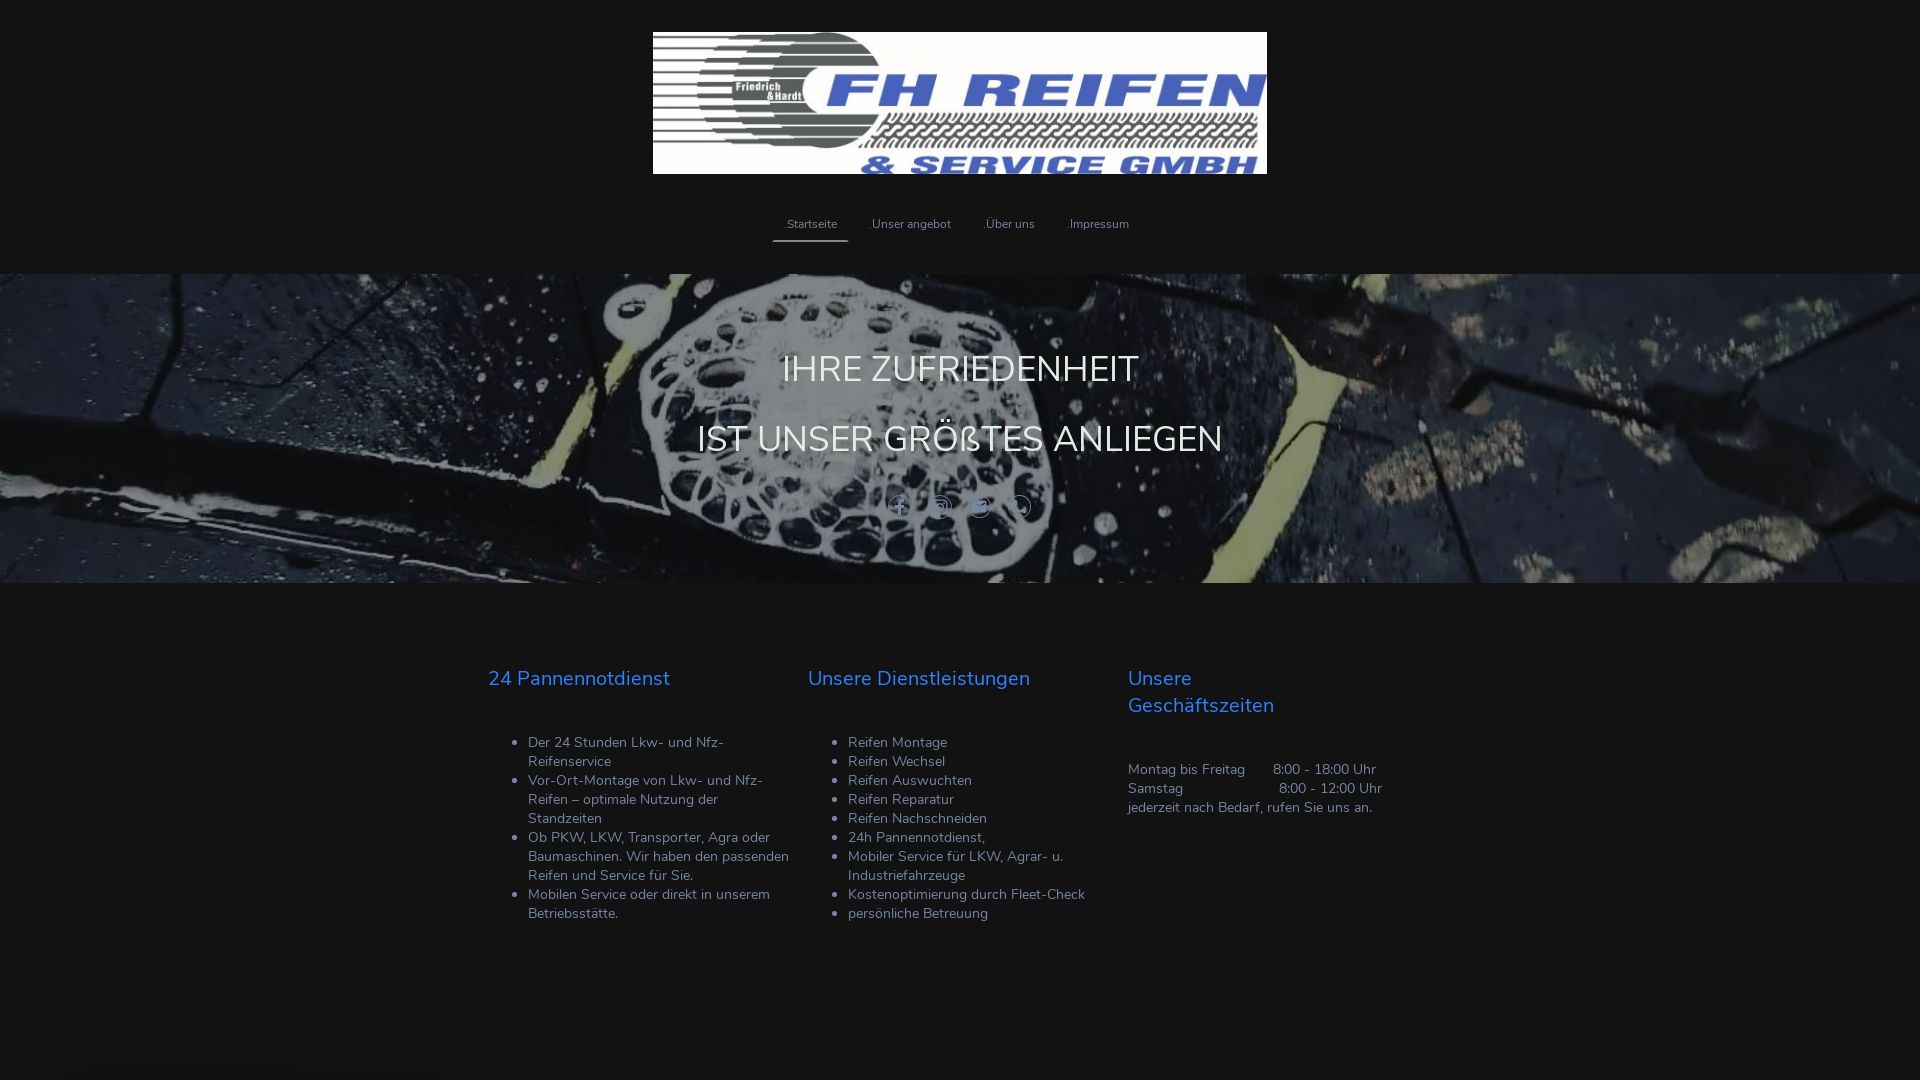 Status do site fh-reifen.de está   ONLINE